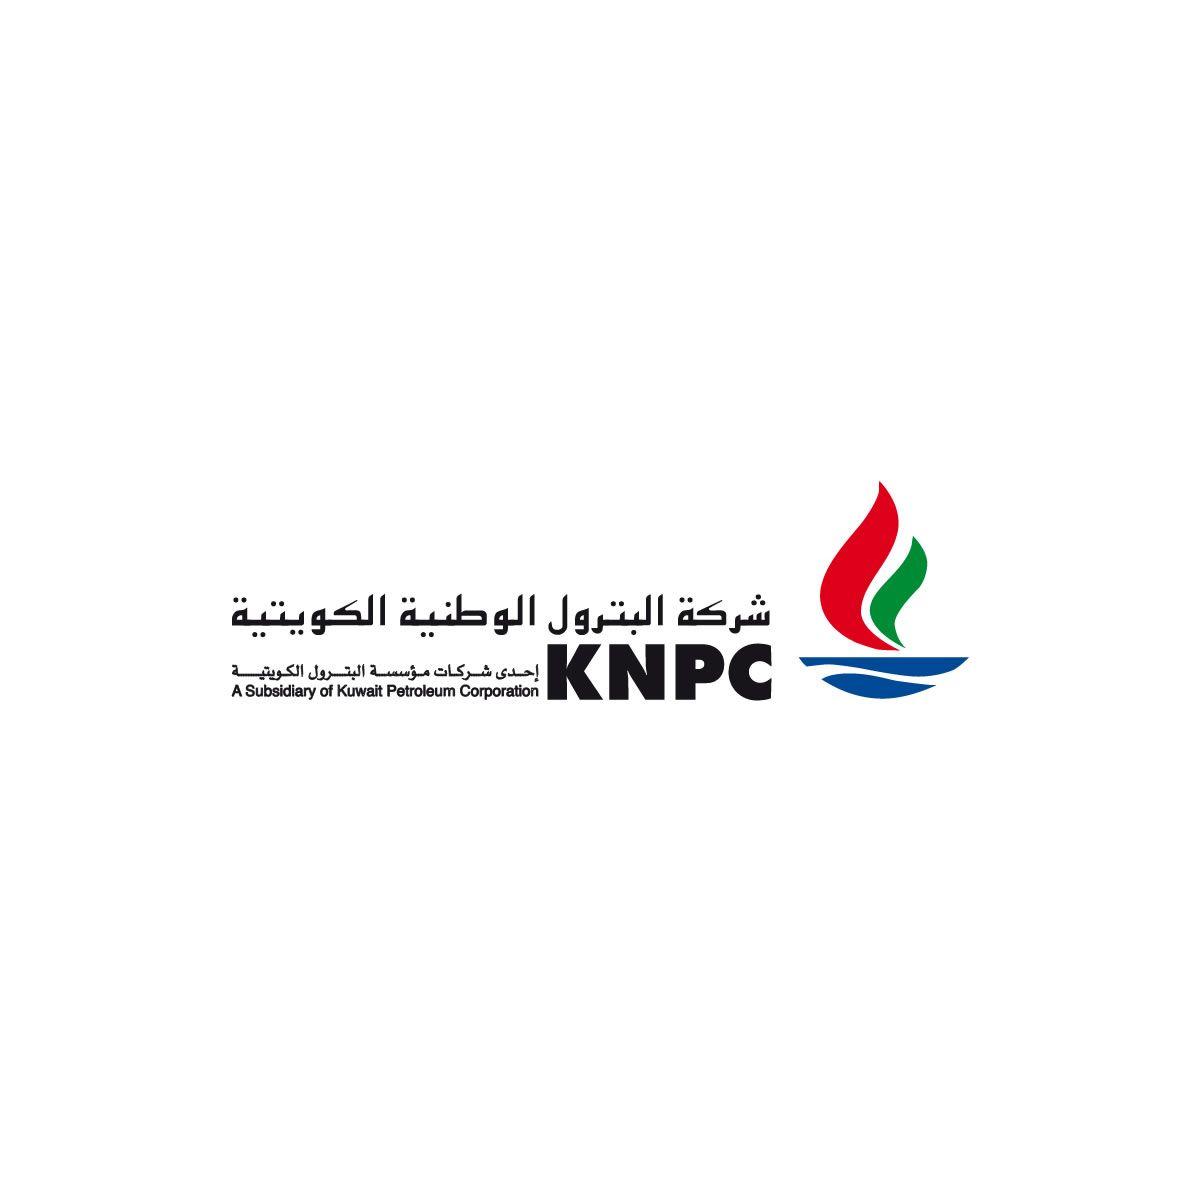 KNPC Logo - Kuwait National Petroleum Company